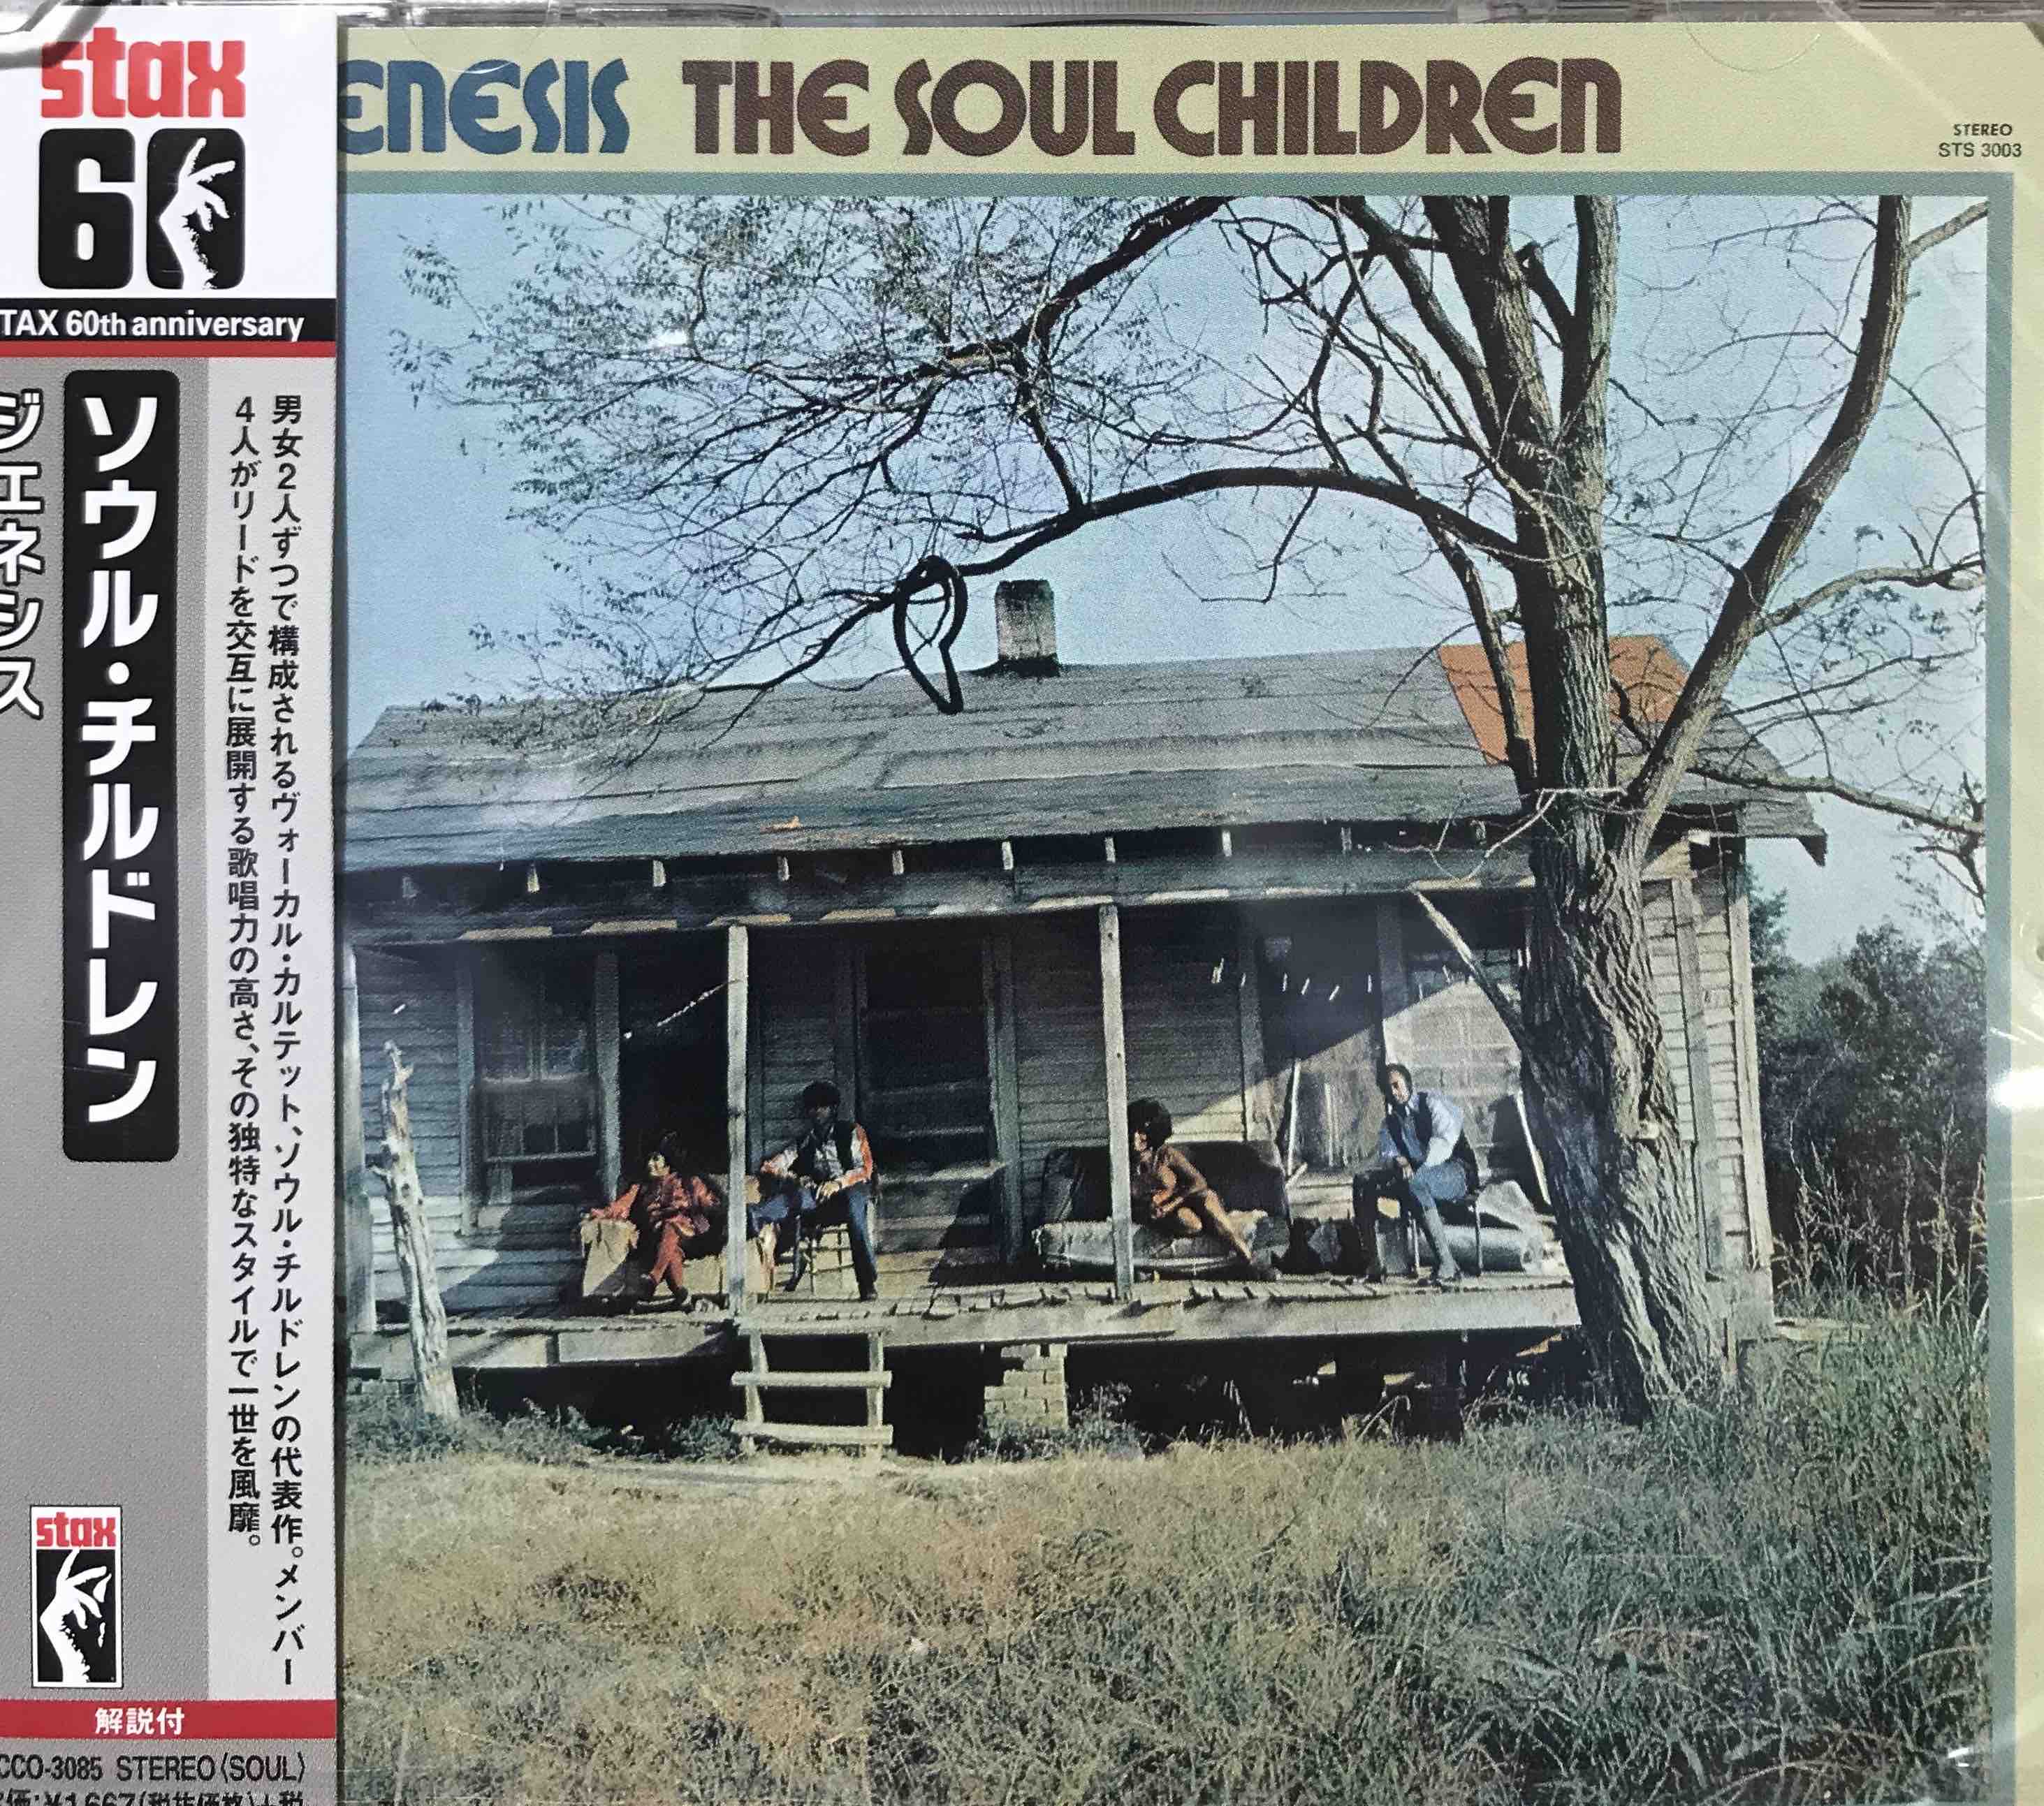 The Soul Children ‎– Genesis